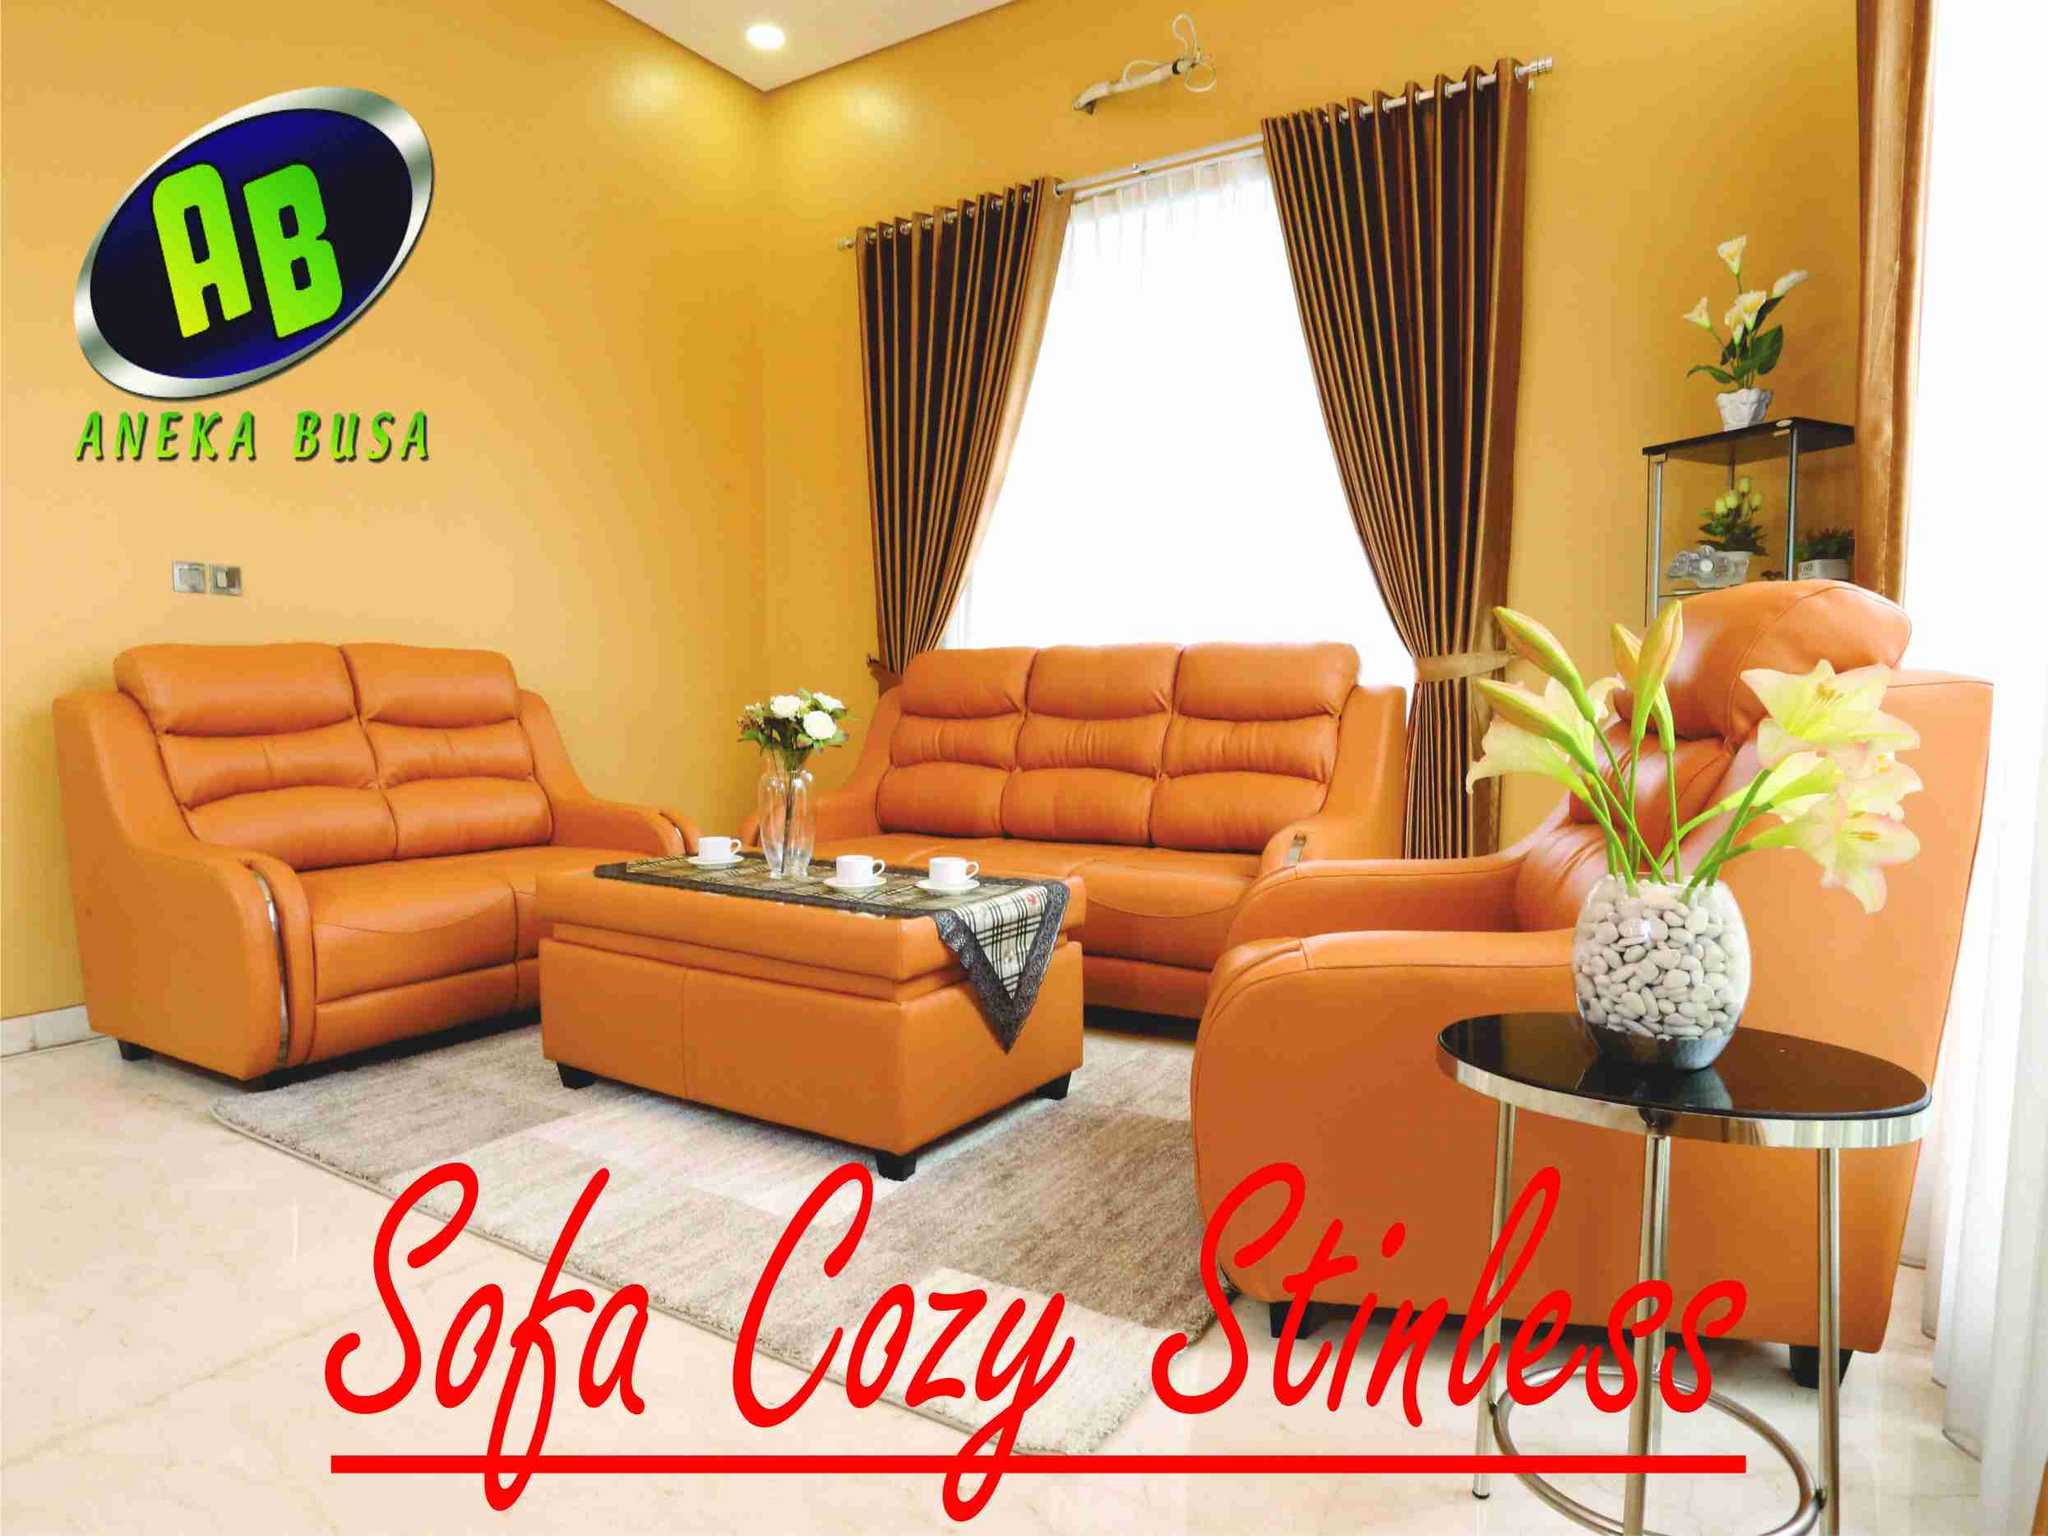 Sofa cozy